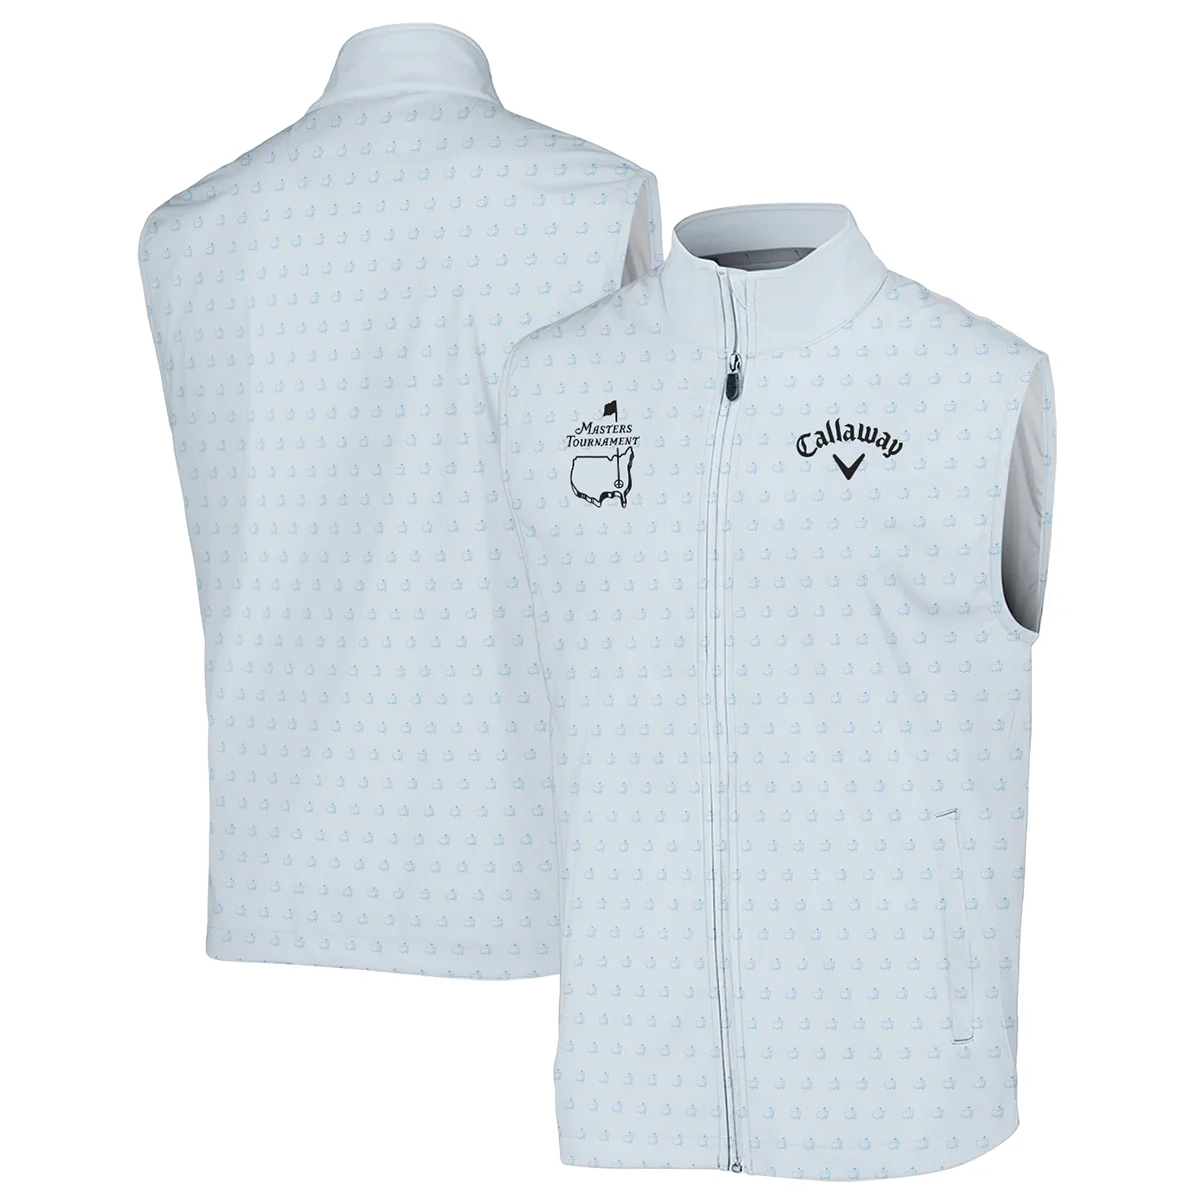 Pattern Masters Tournament Callaway Polo Shirt White Light Blue Color Pattern Logo  Polo Shirt For Men